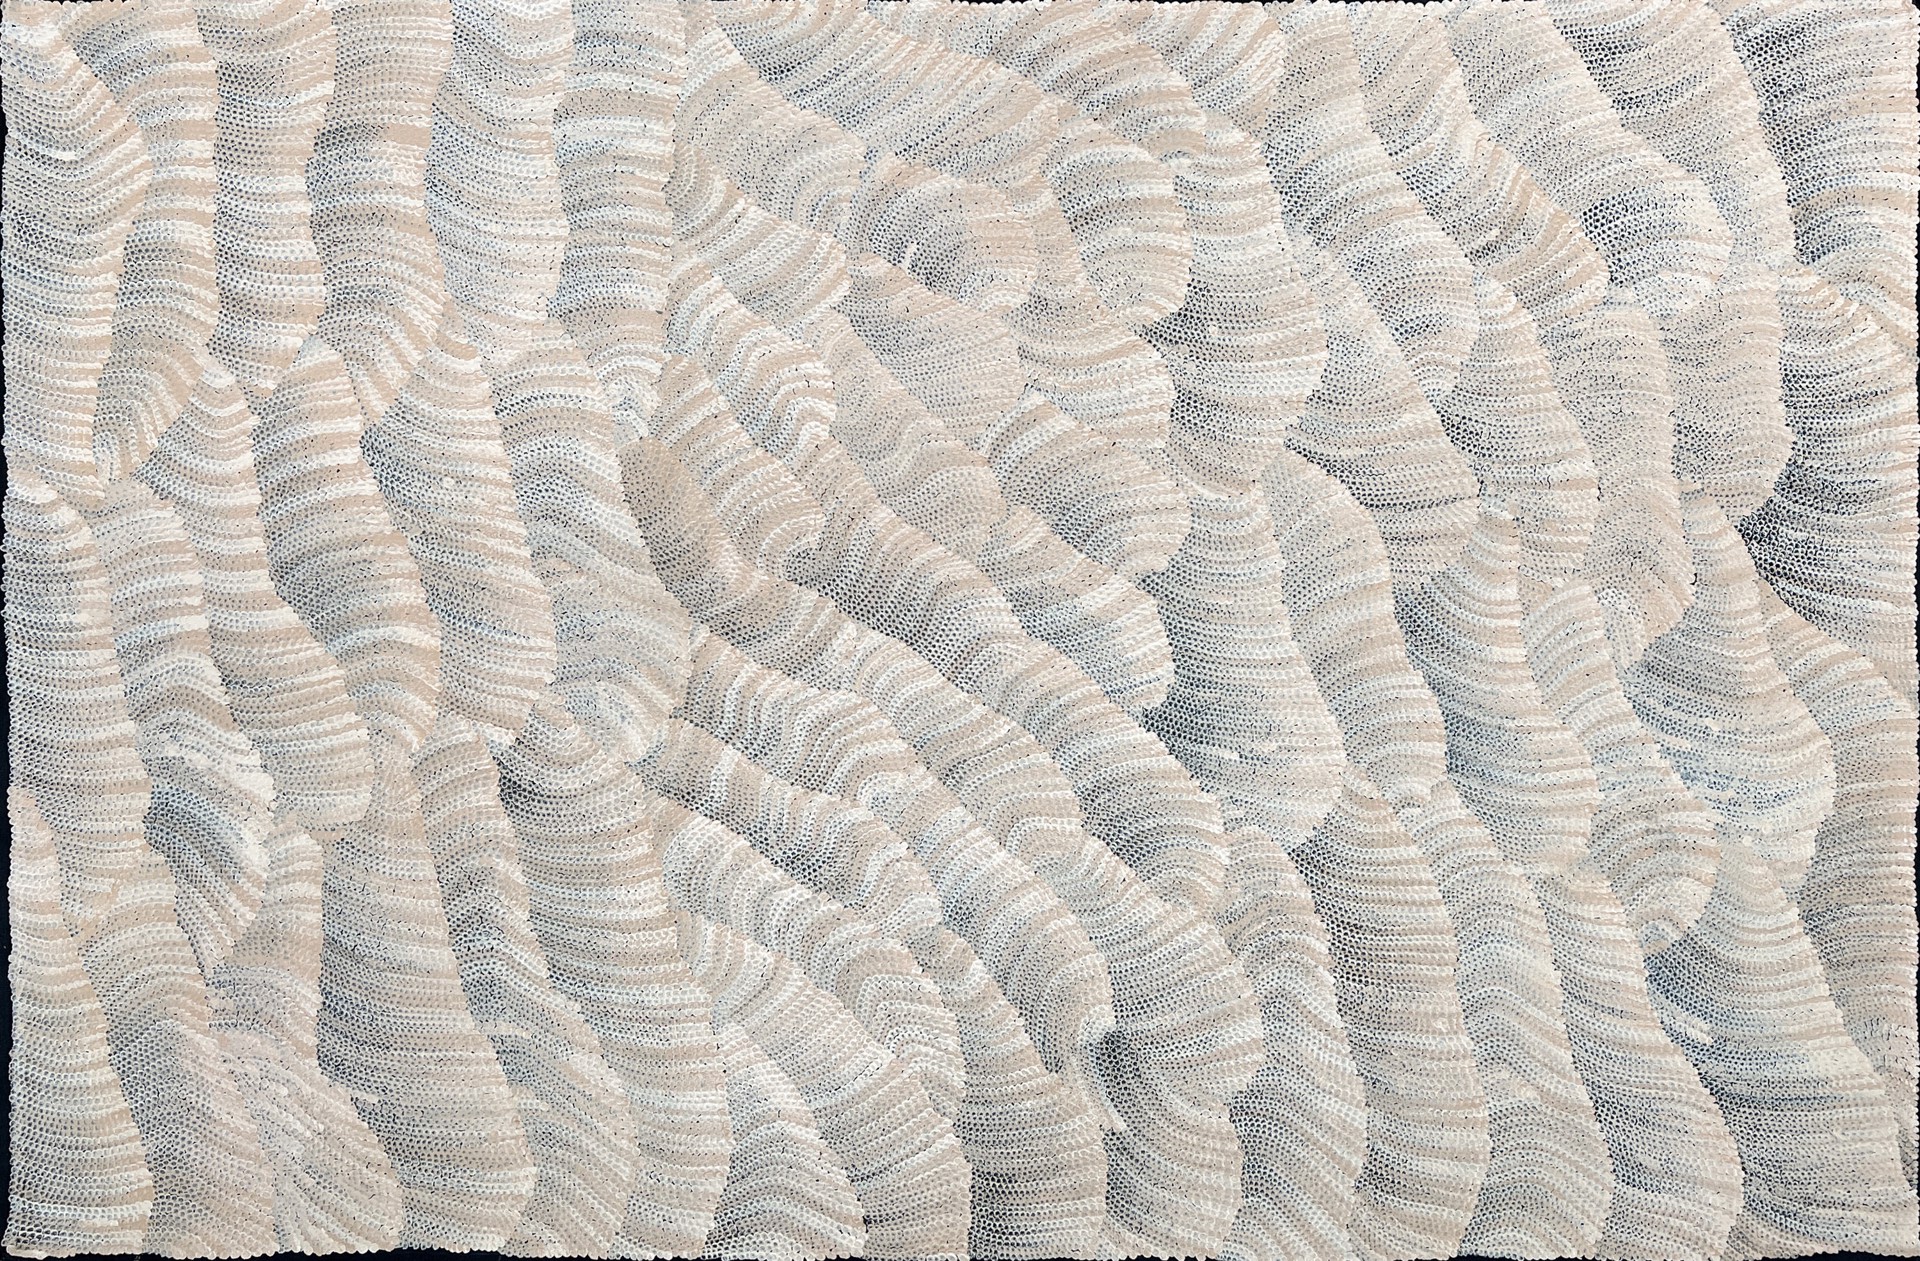 Tali (Sand Dunes) by Maureen Hudson Nampijinpa